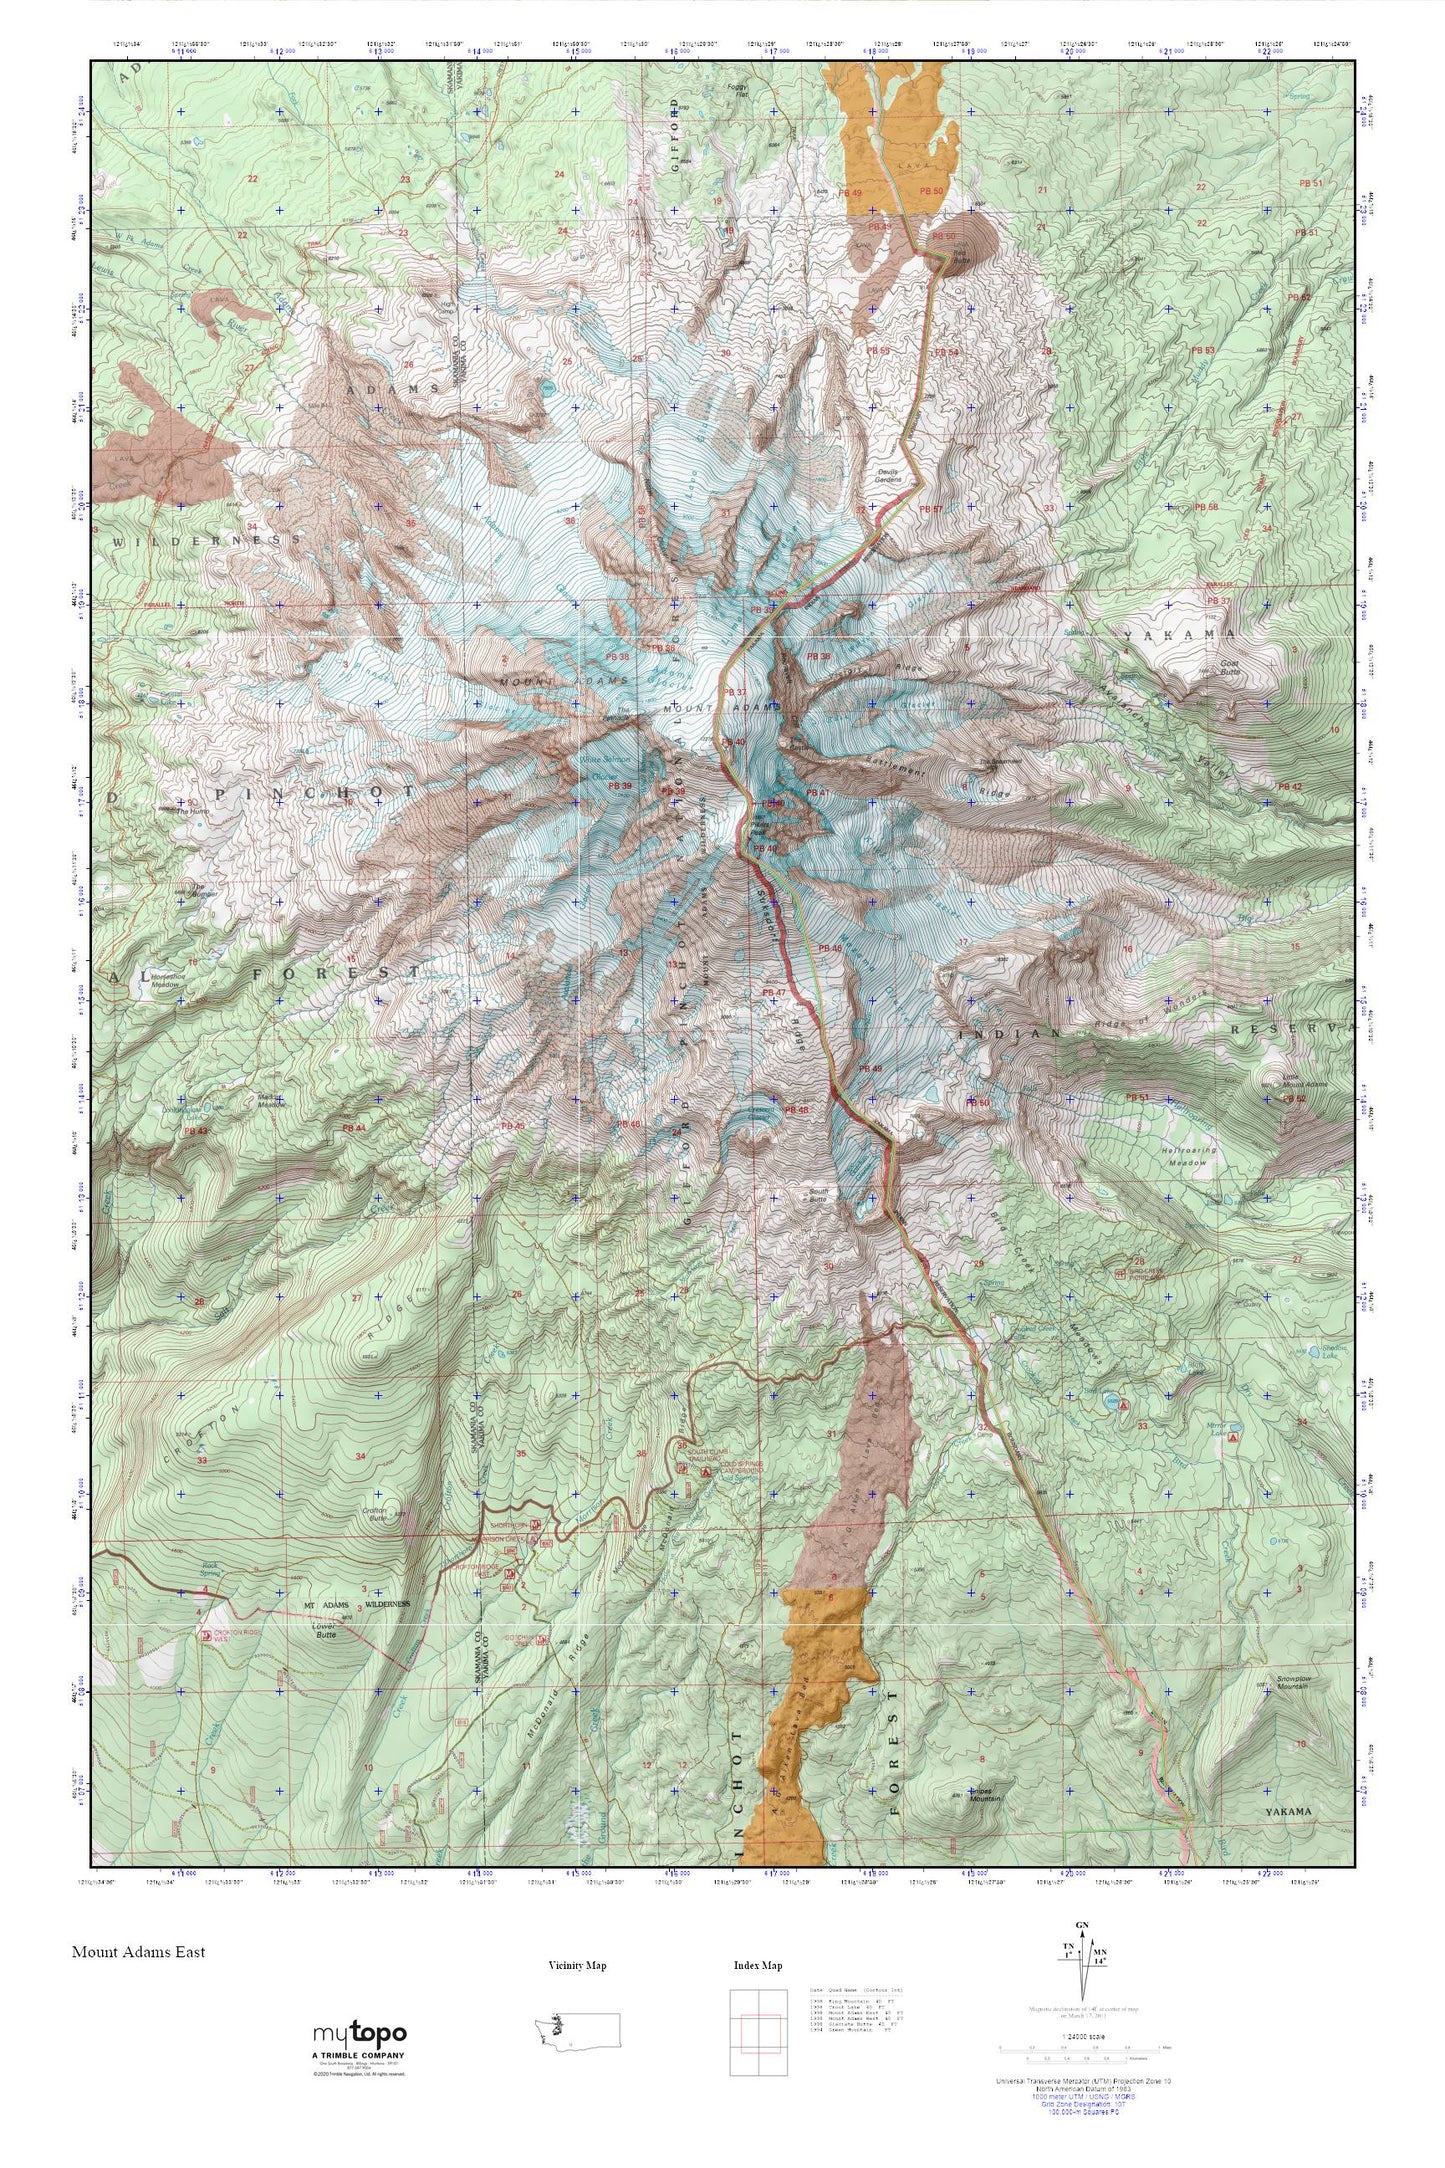 Mount Adams East MyTopo Explorer Series Map Image